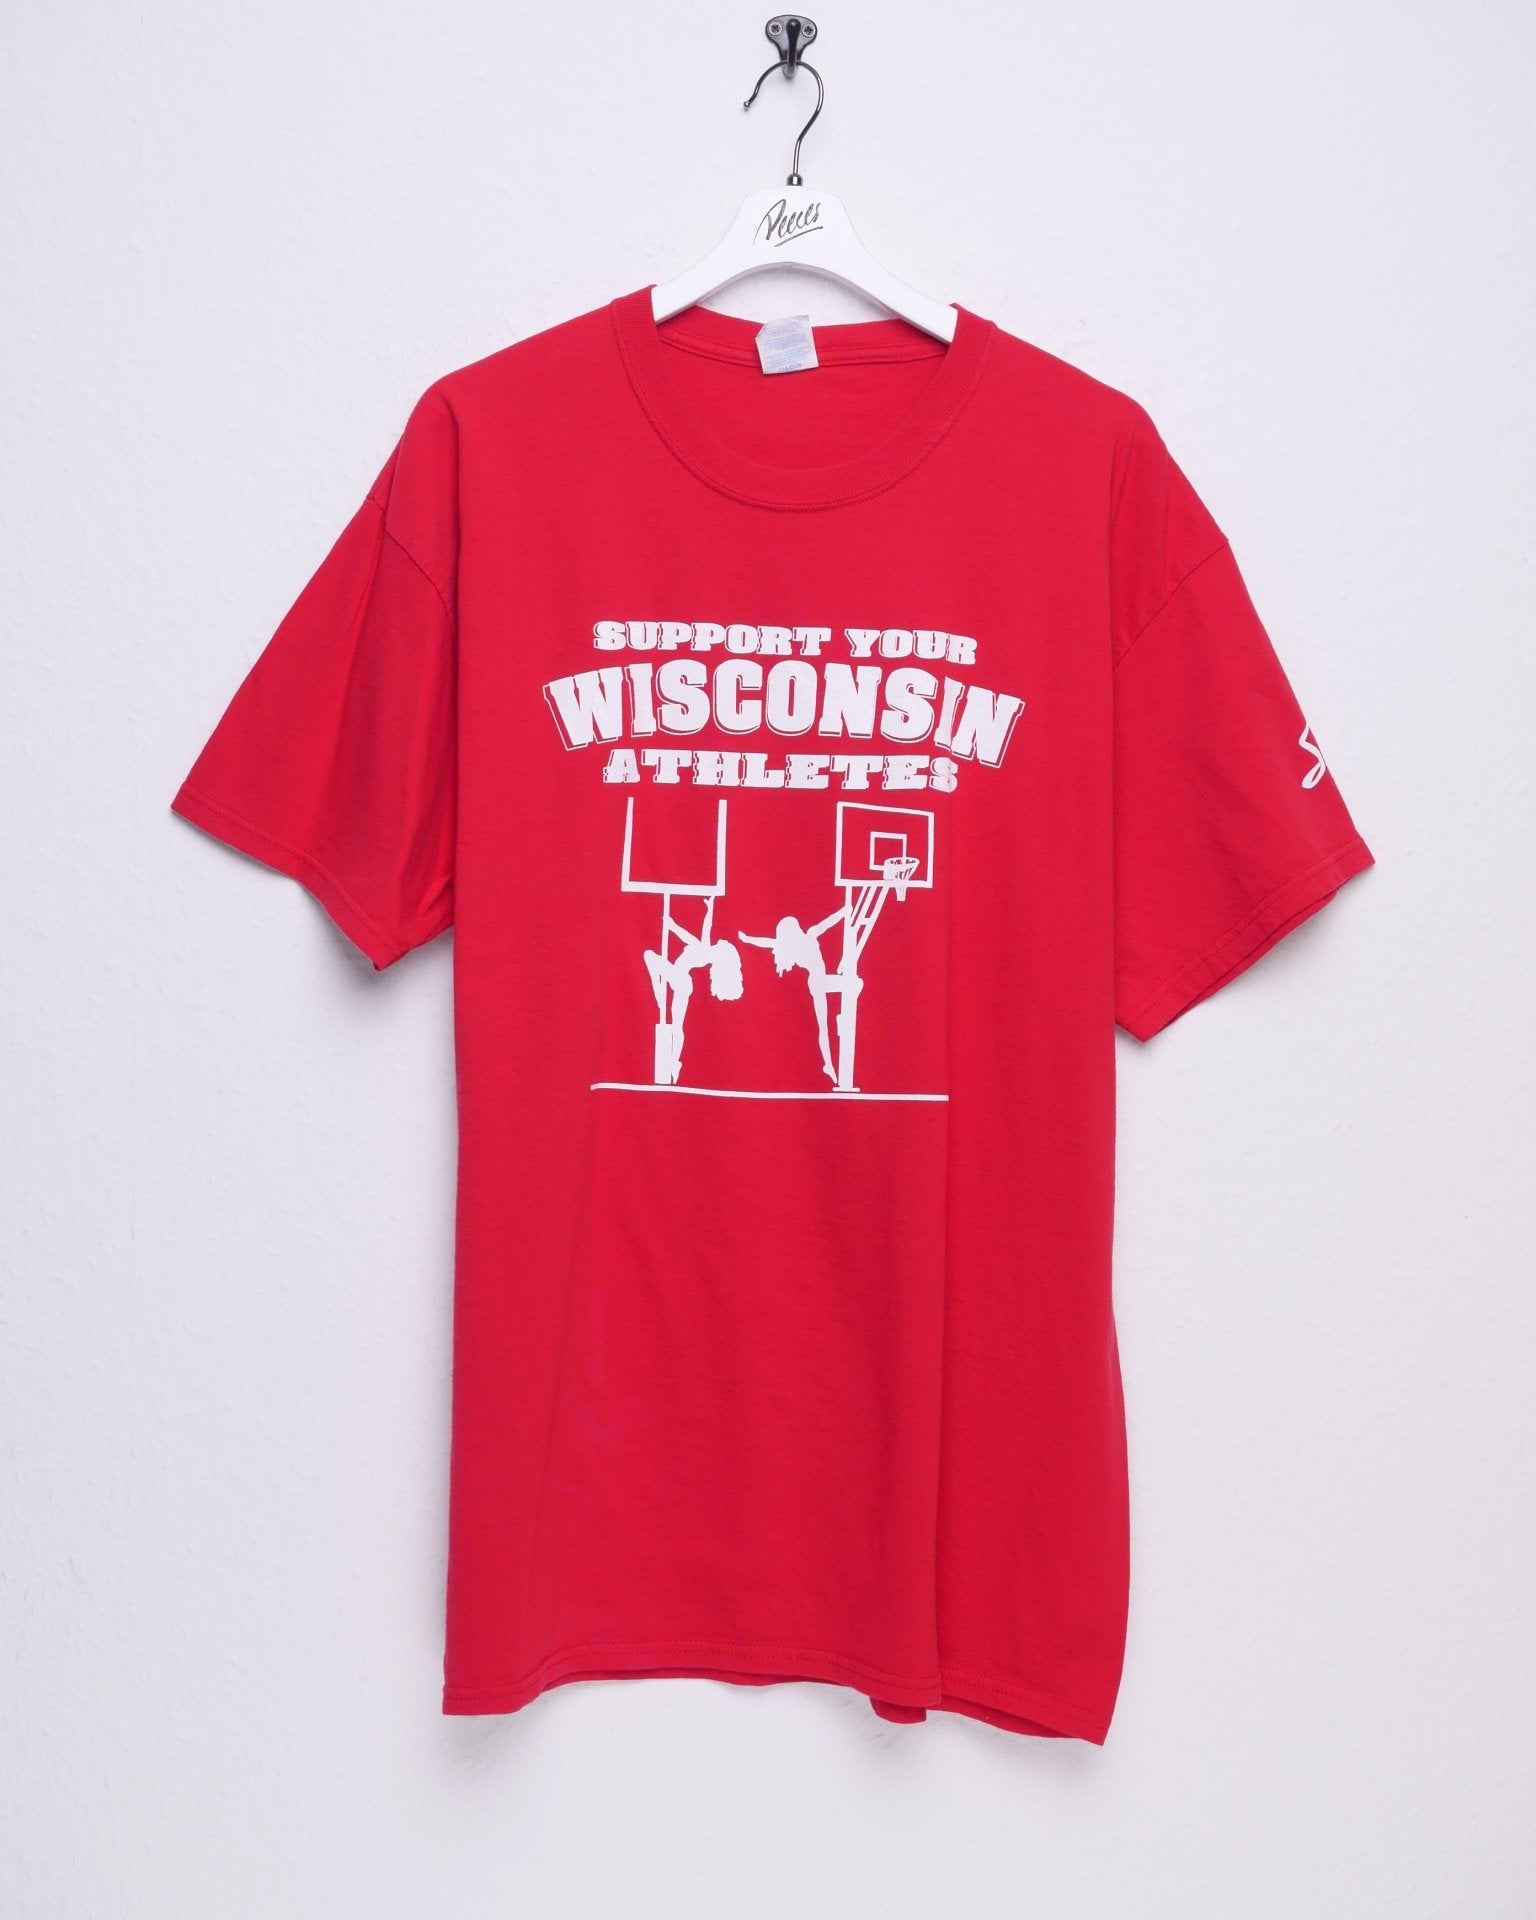 Wisconsin Athletes printed Logo Shirt - Peeces